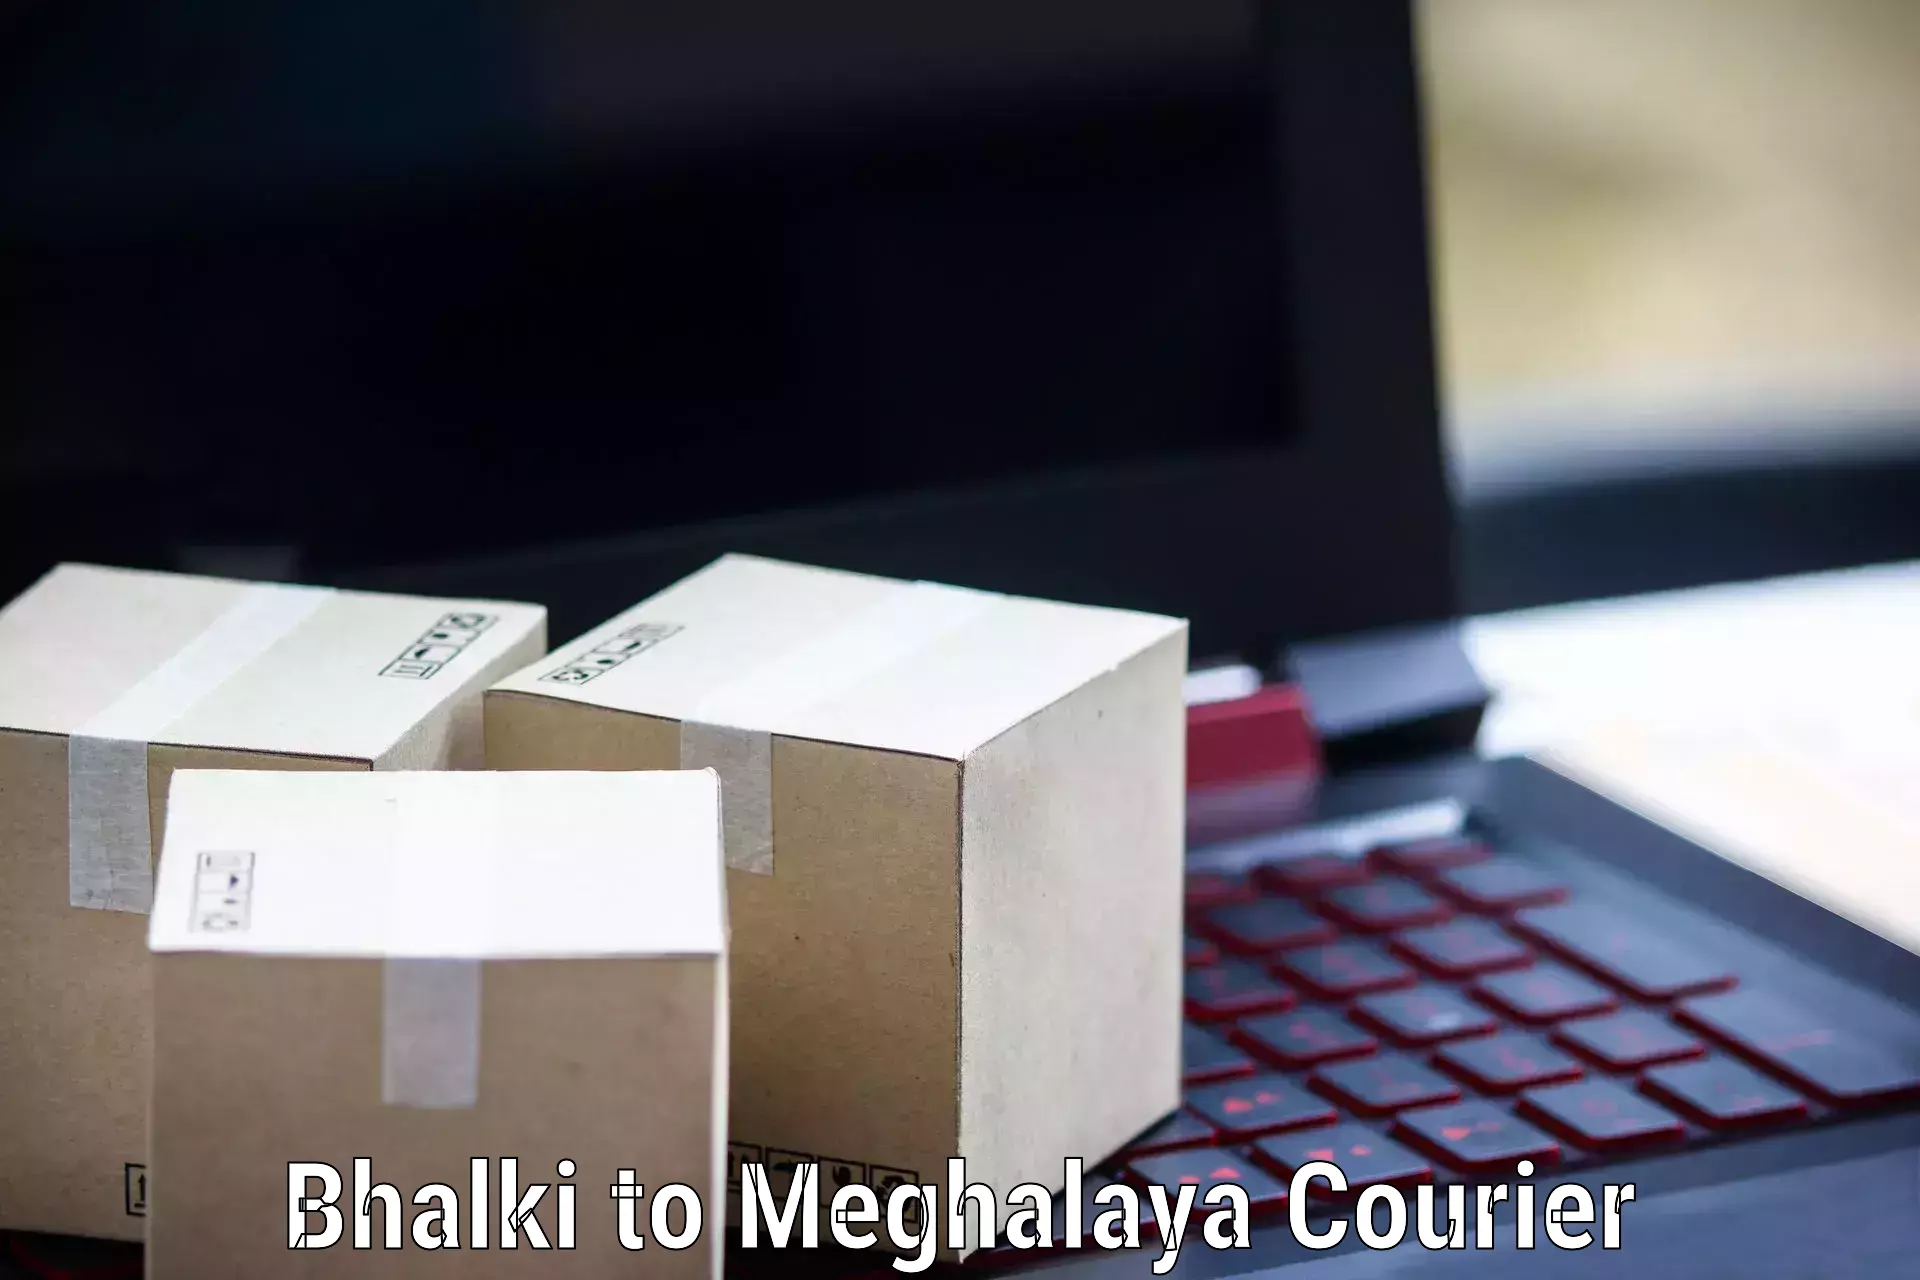 Logistics service provider Bhalki to Meghalaya